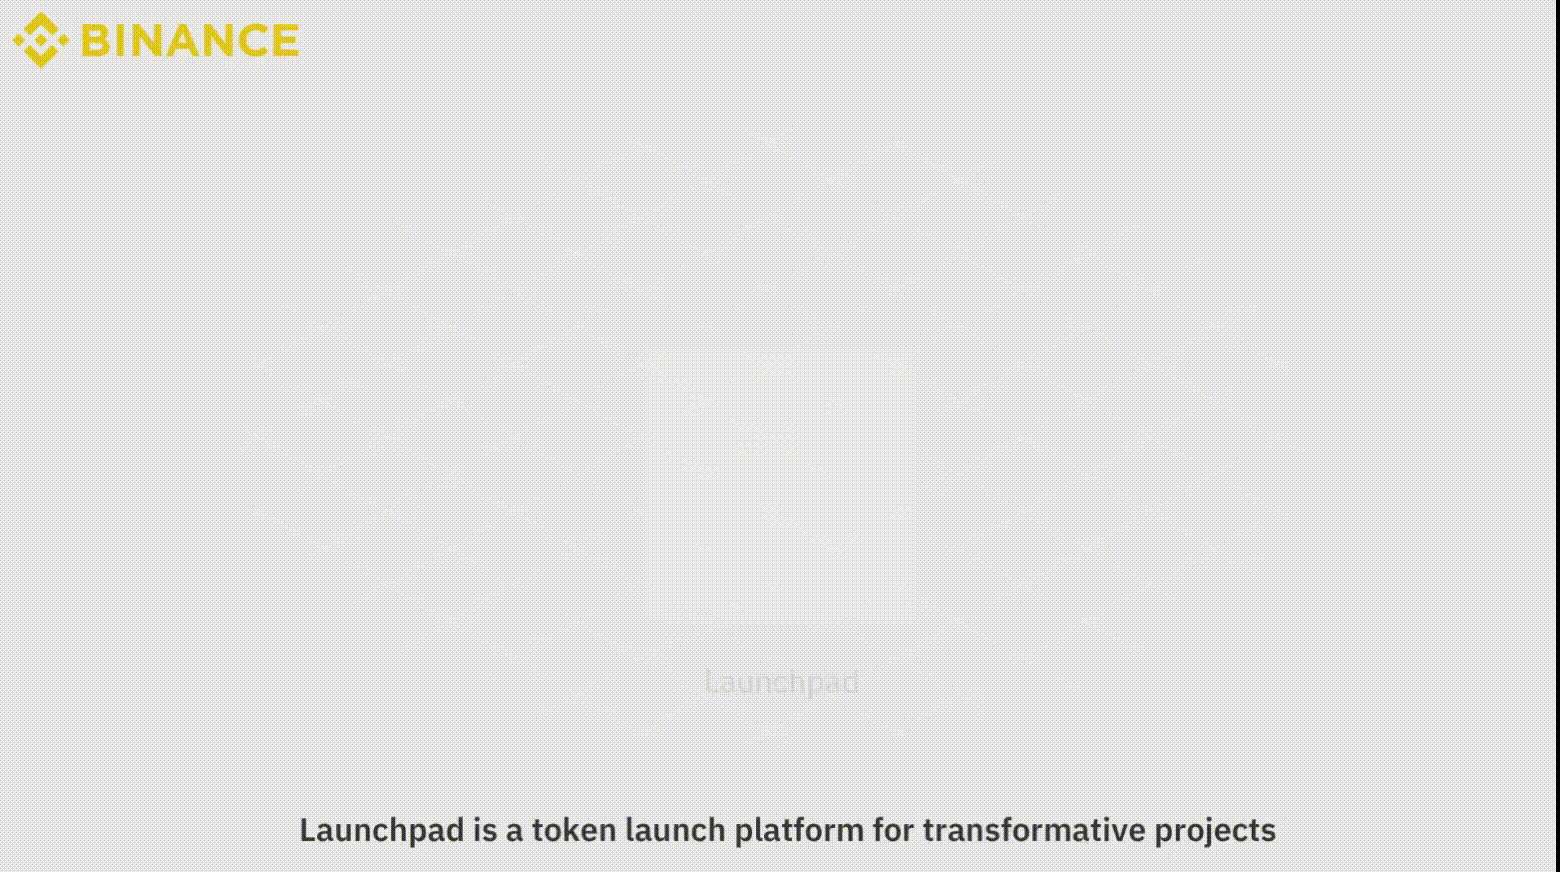 [Binance] Launchpad